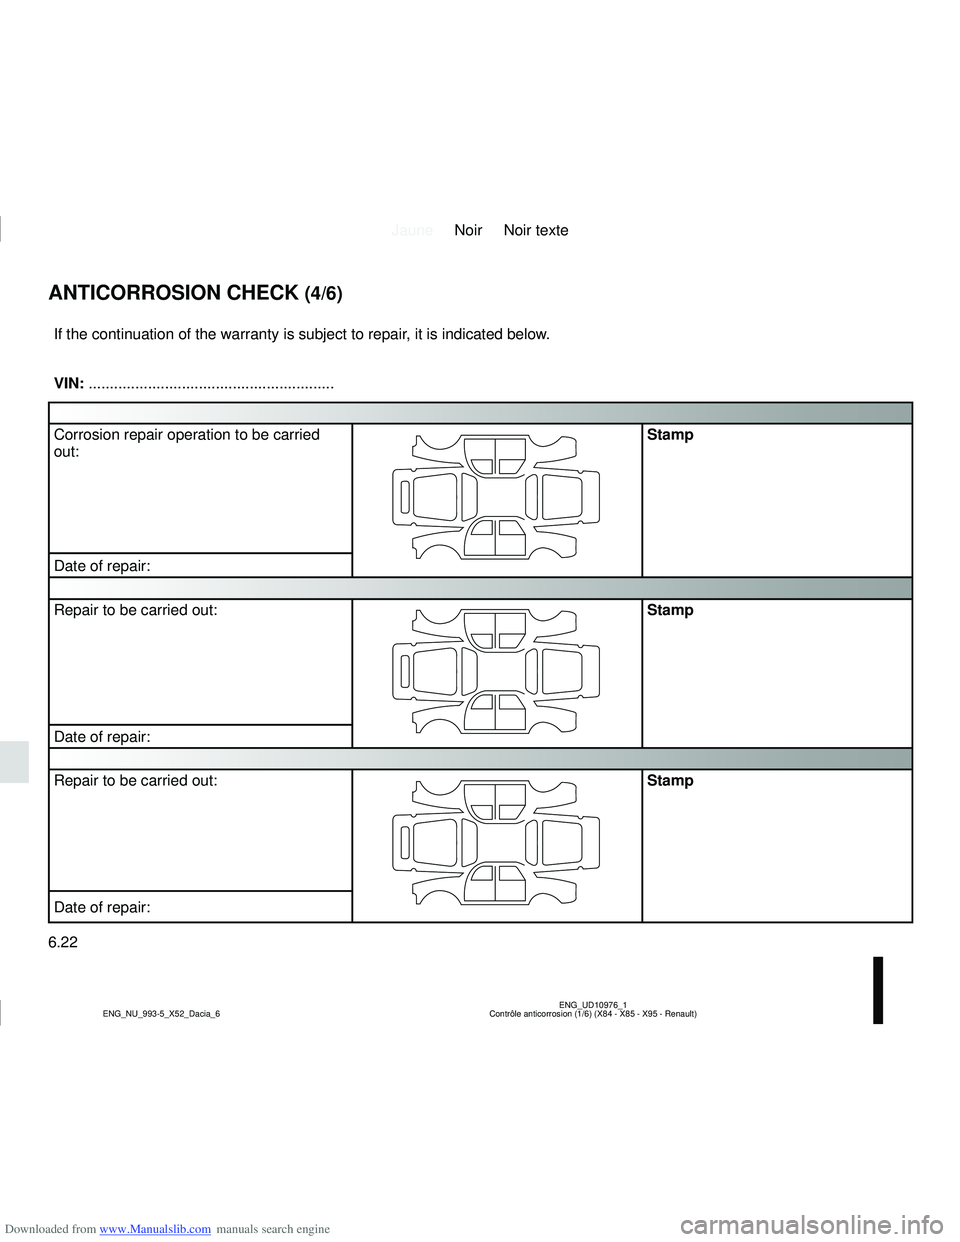 DACIA LOGAN 2021 Manual PDF Downloaded from www.Manualslib.com manuals search engine JauneNoir Noir texte
6.22
ENG_UD10976_1
Contrôle anticorrosion (1/6) (X84 - X85 - X95 - Renault)
ENG_NU_993-5_X52_Dacia_6
ANTICORROSION CHECK 